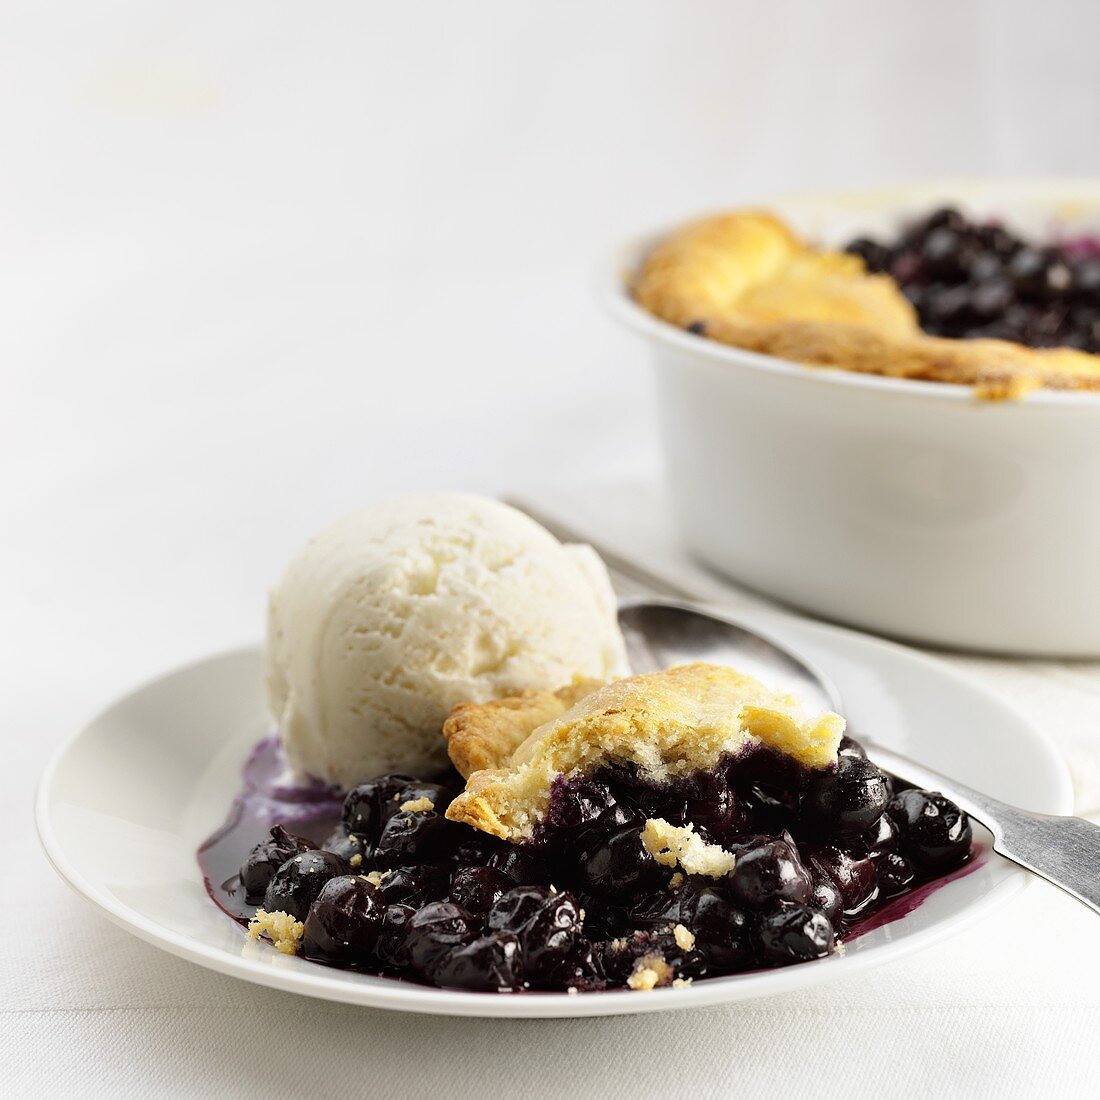 Blueberry cobbler (USA) with vanilla ice cream